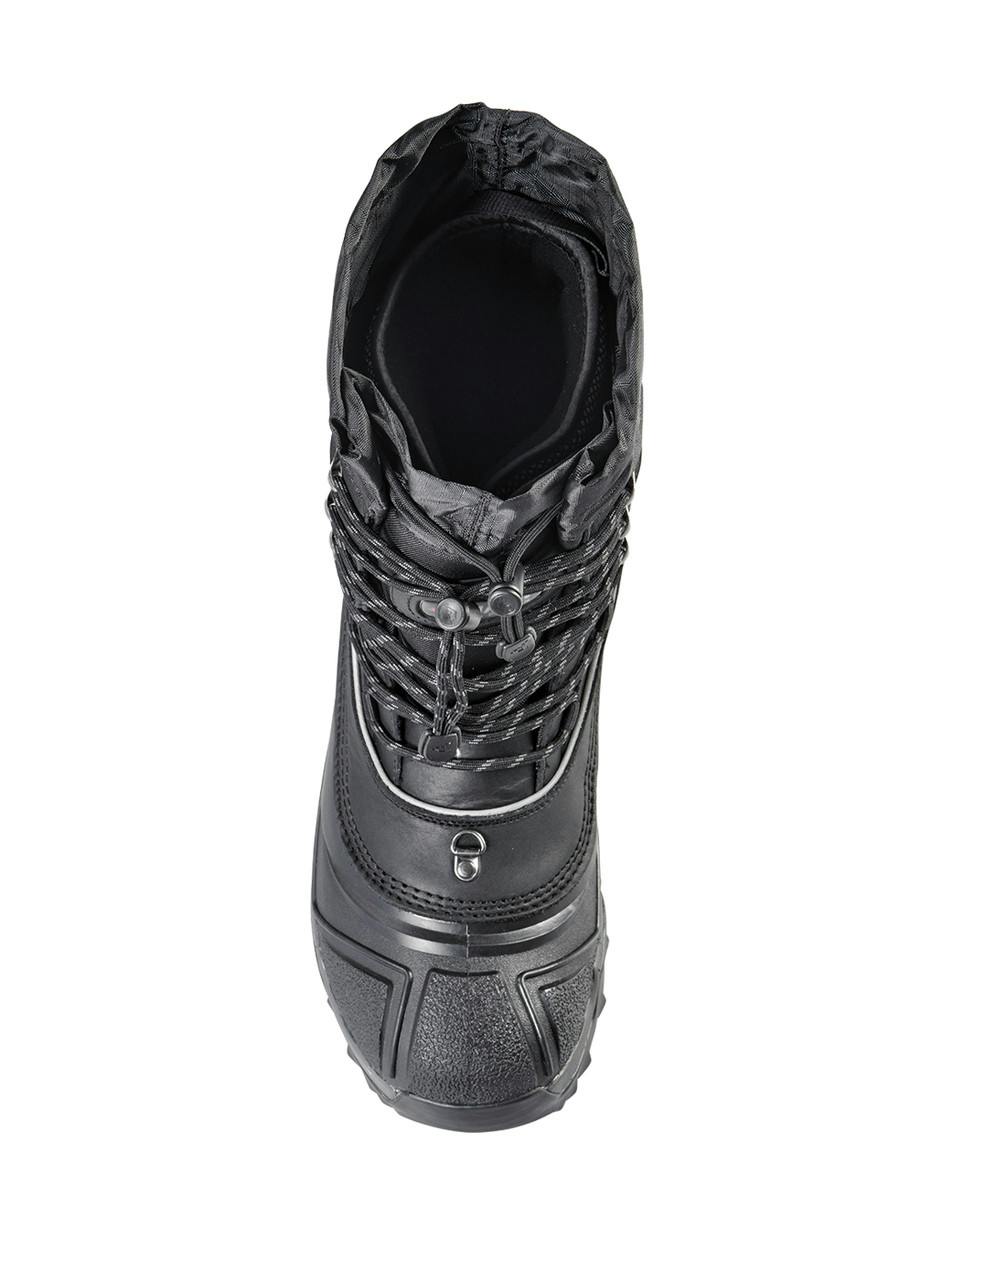 Snow Monster Waterproof Winter Boots Black